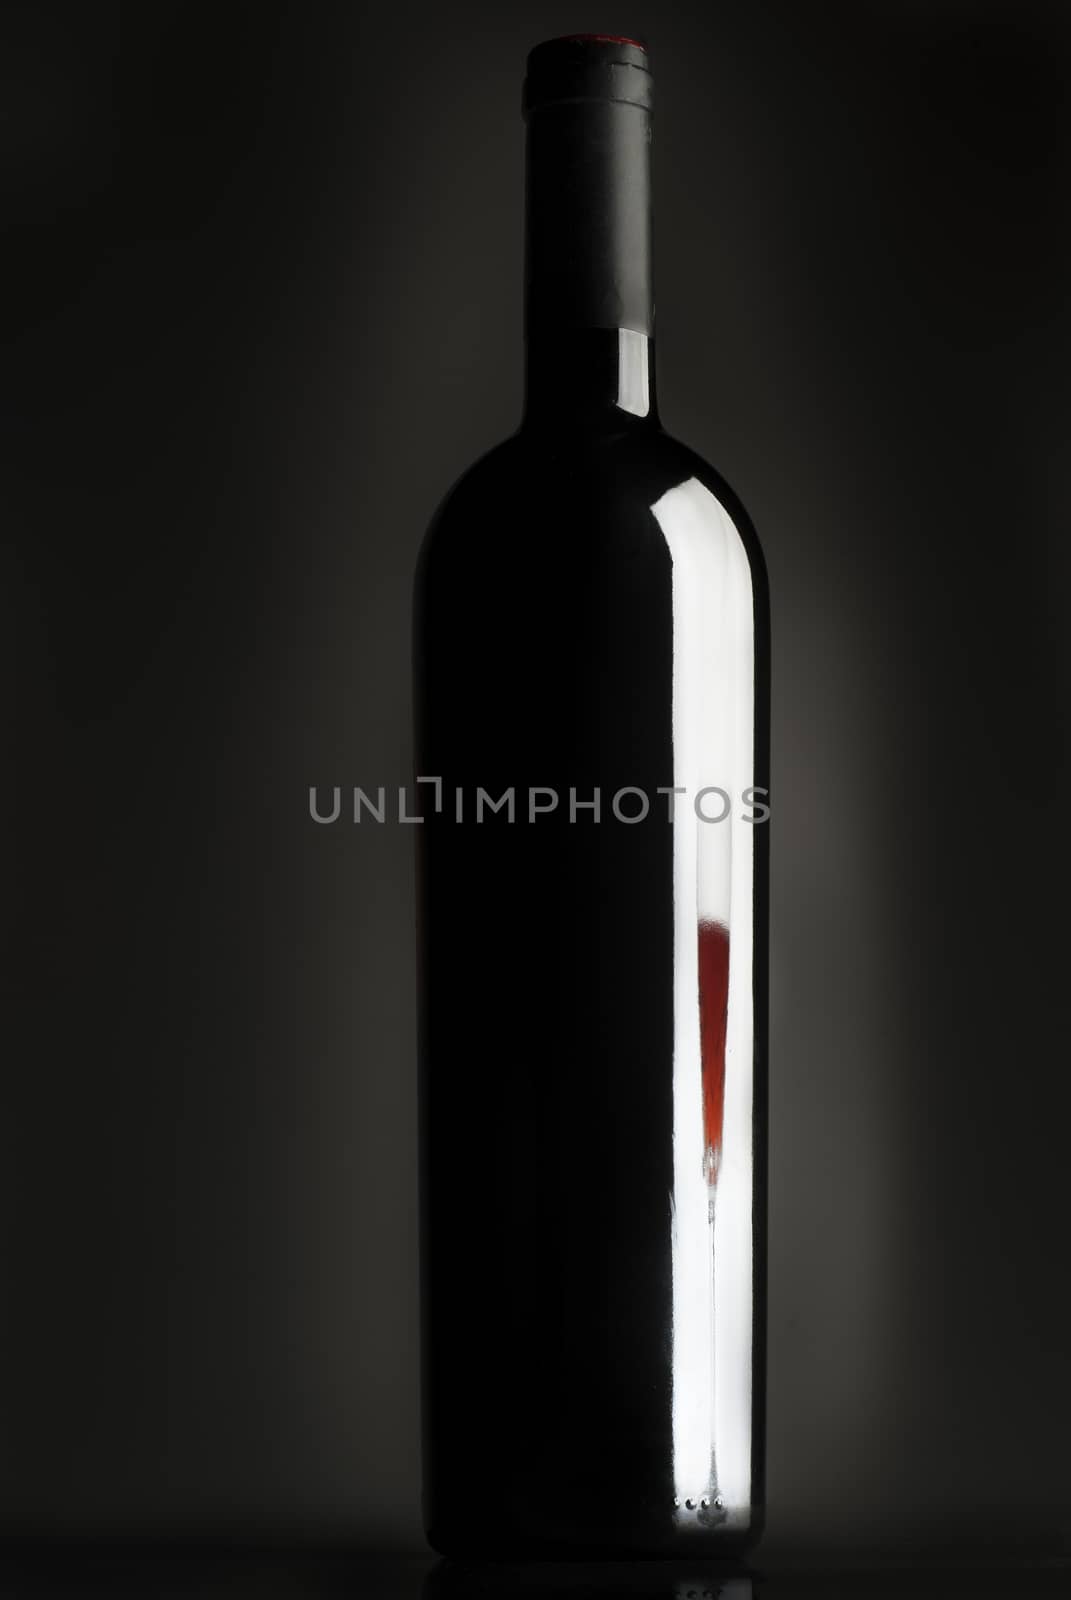 Bottle of wine, reflection of wine glass, red wine, black background by jalonsohu@gmail.com